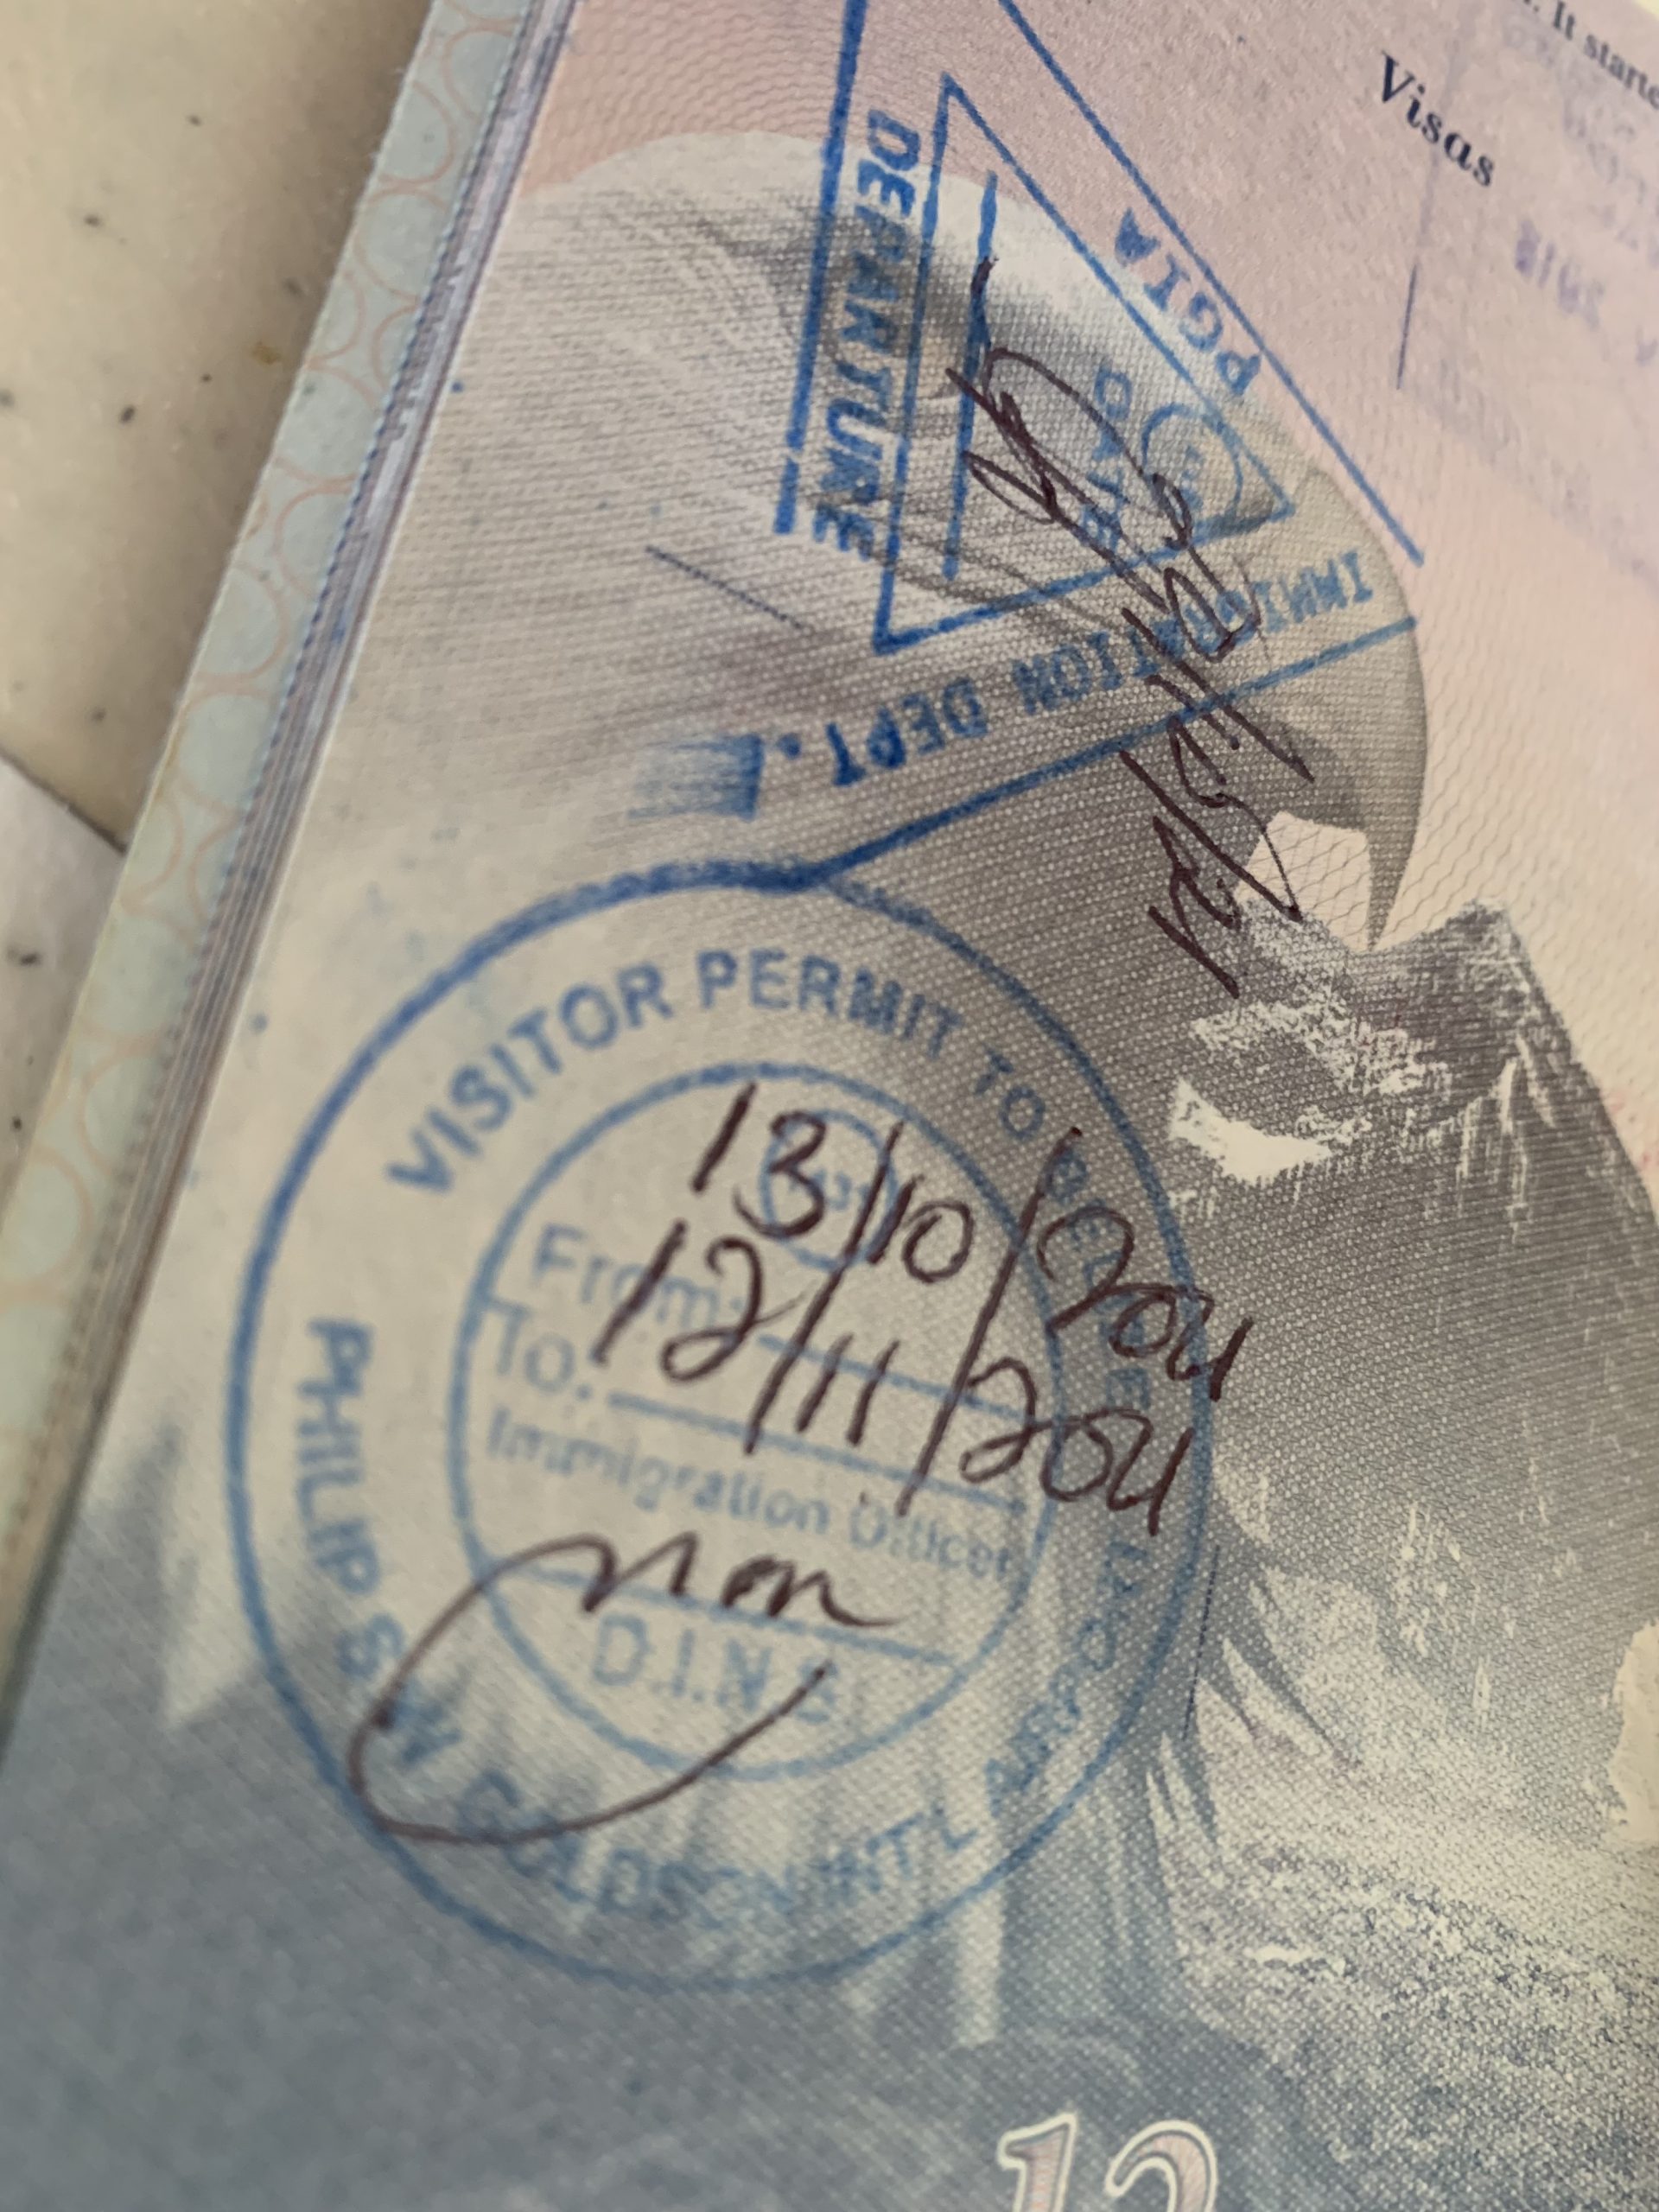 world travel passport stamps belize